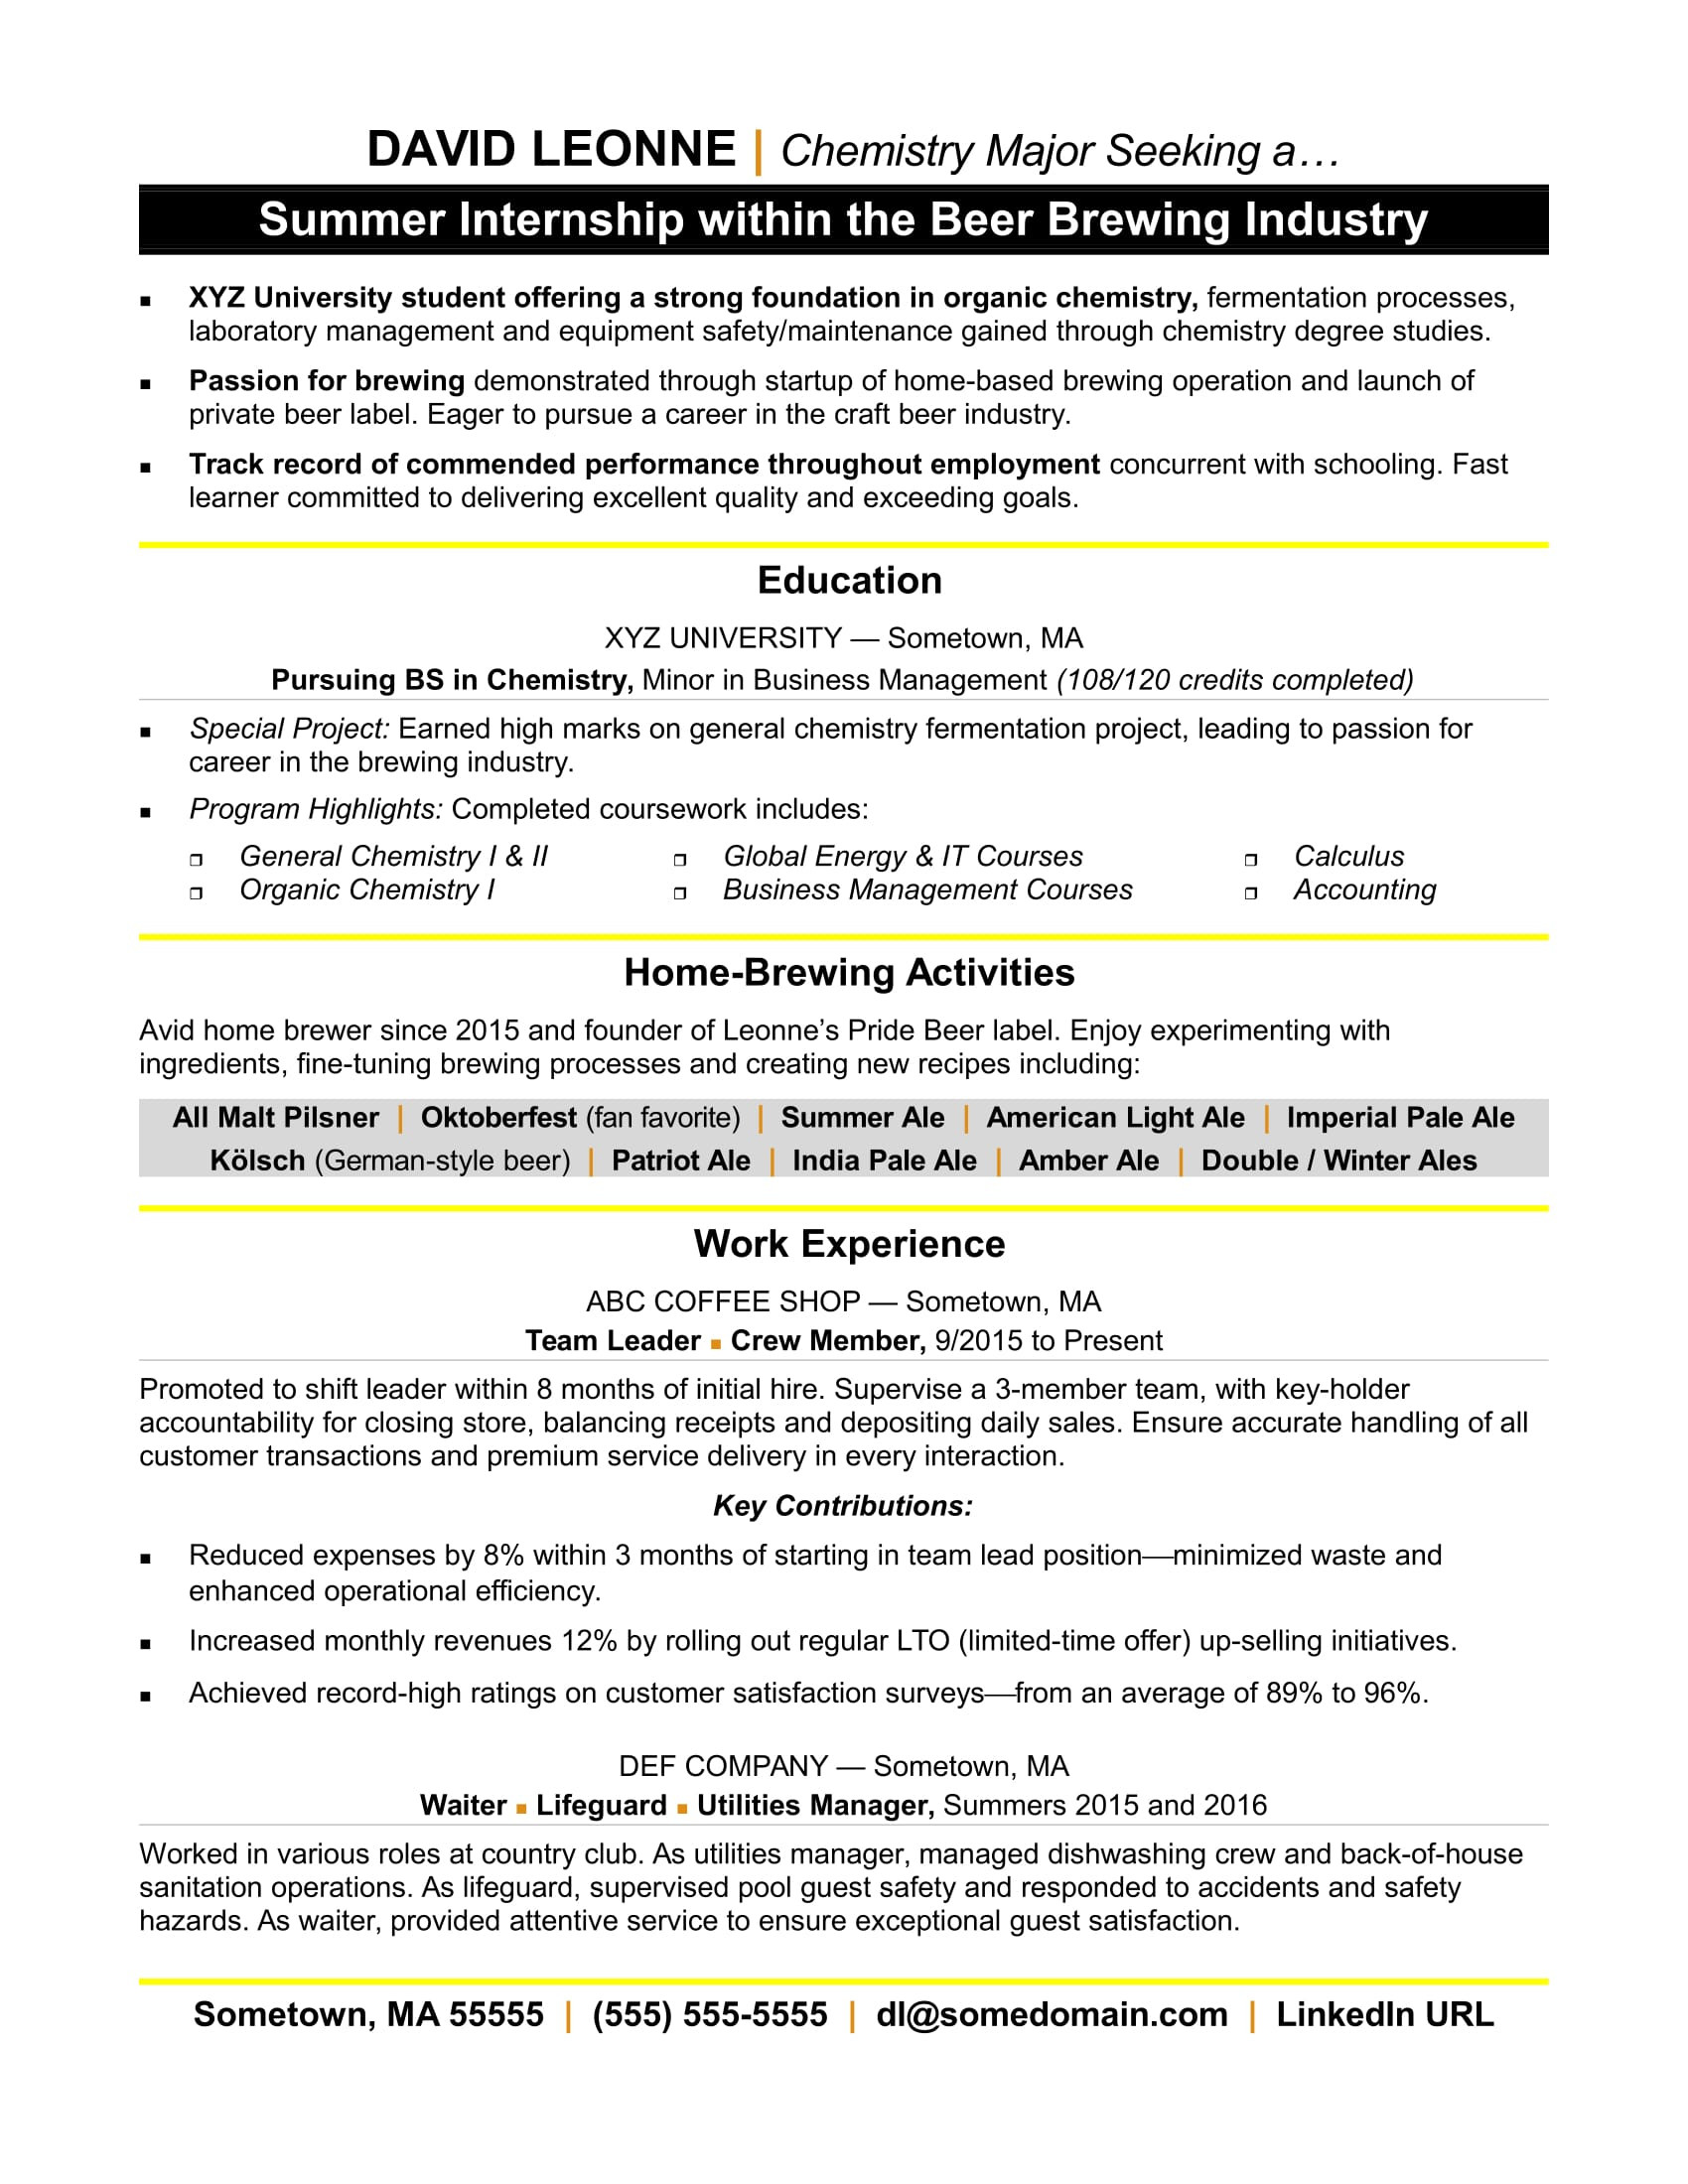 Sample Resume with Internship Masters Degree Resume for Internship Monster.com